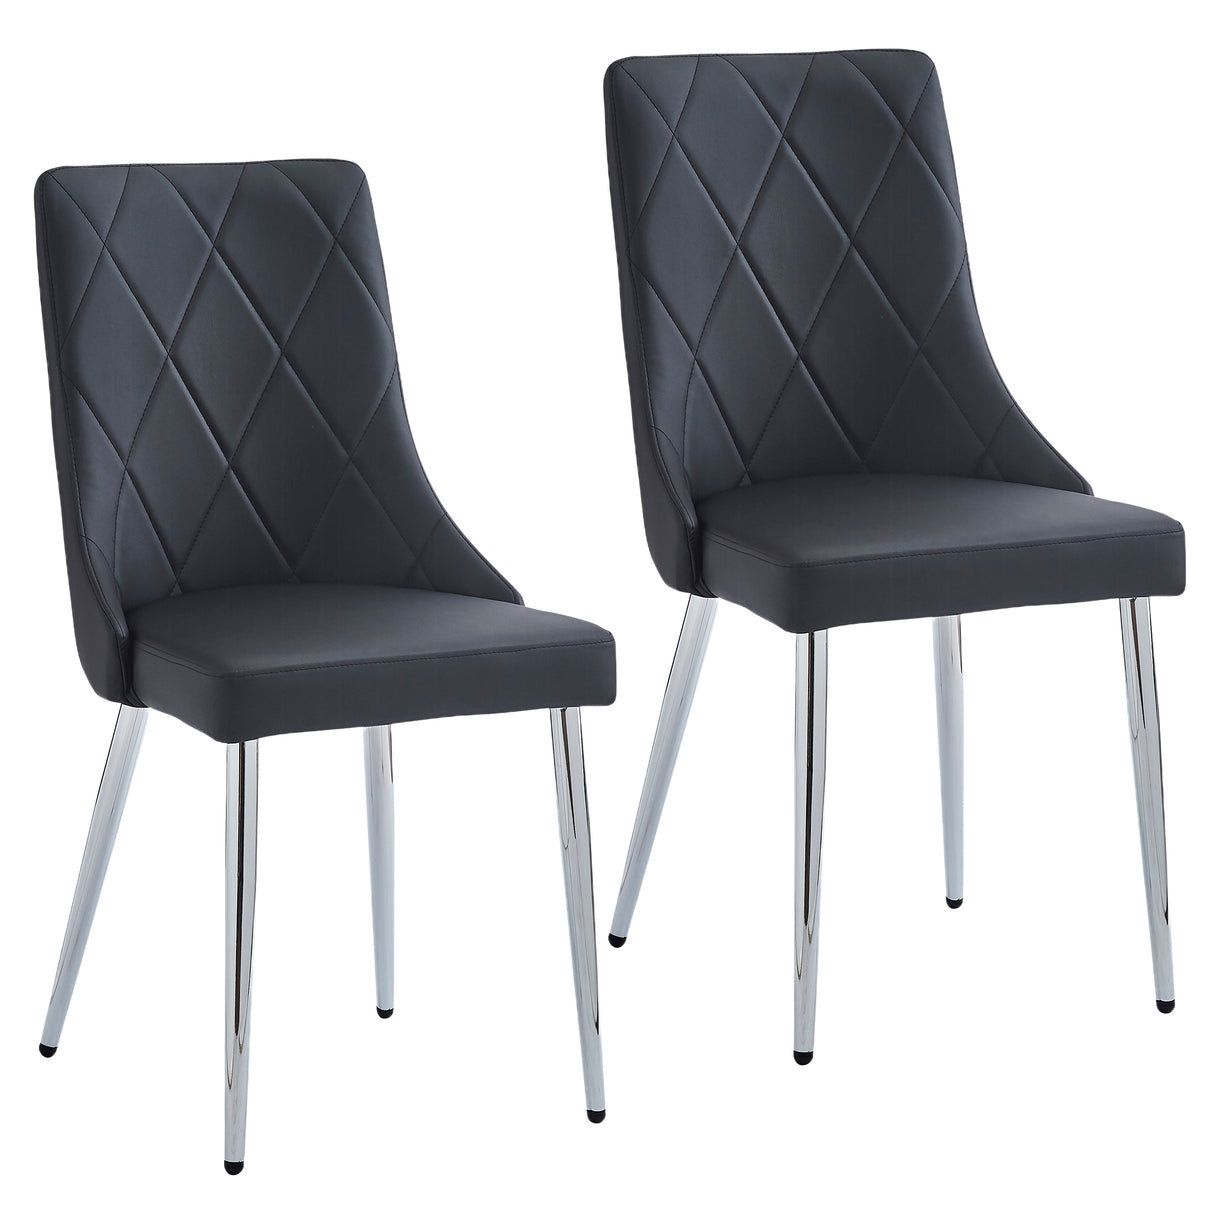 Devo Side Chair Black (Set of 2)